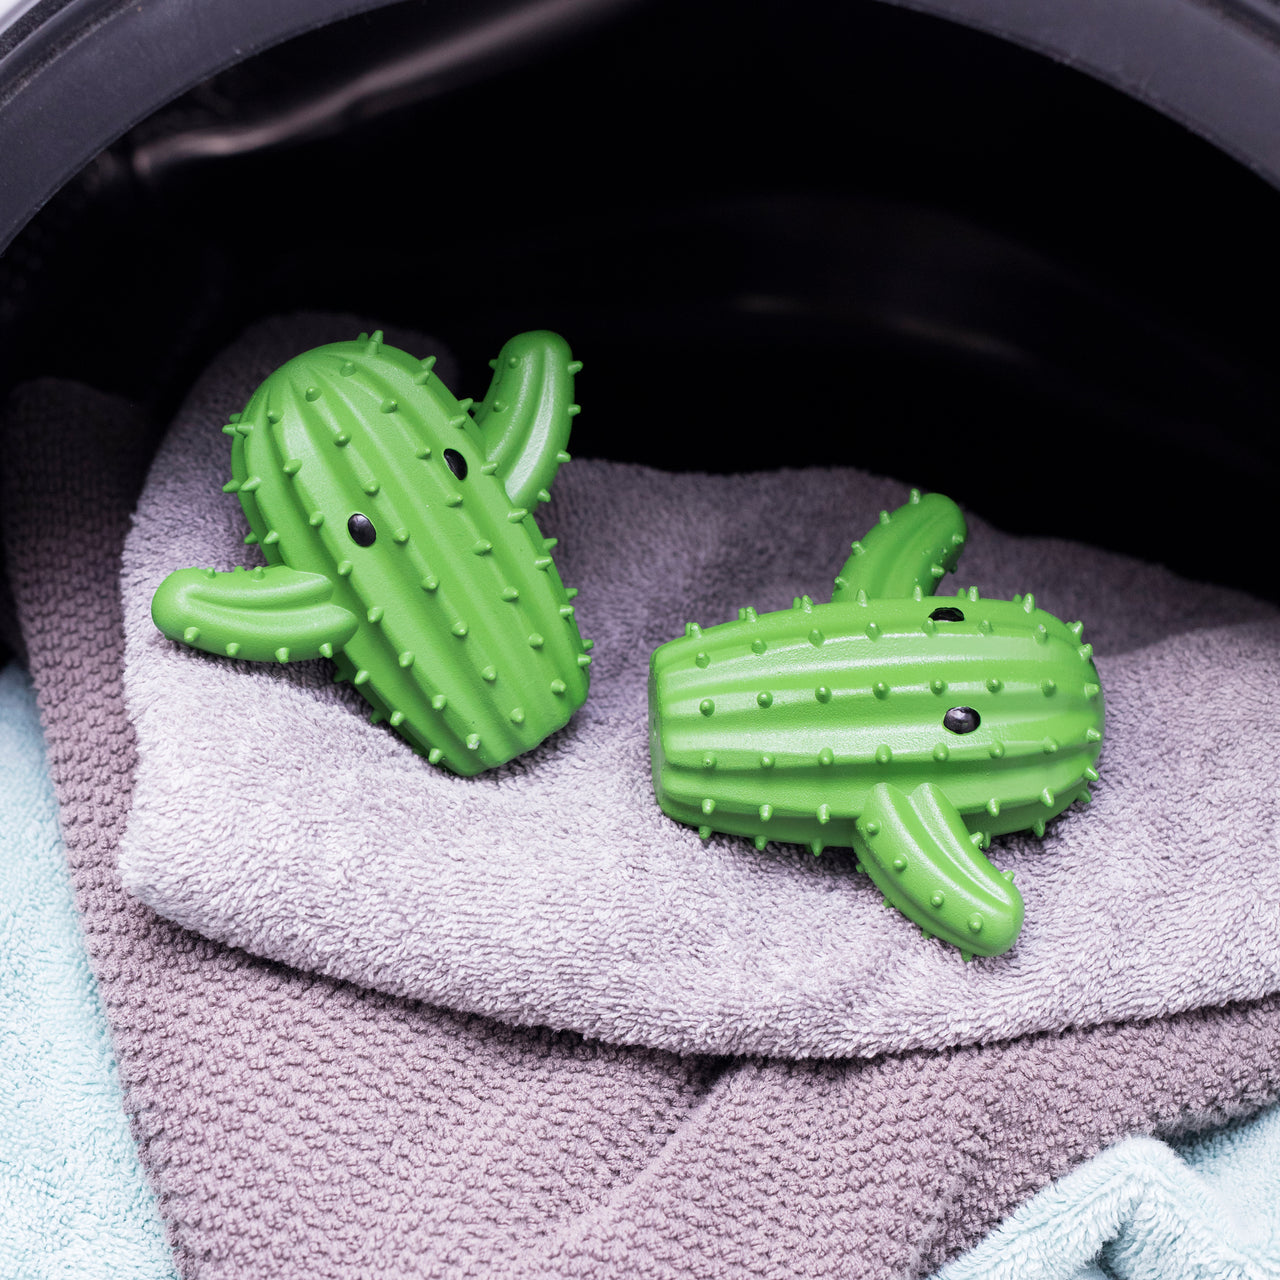 Dryer Buddies - Cactus Set Of 2